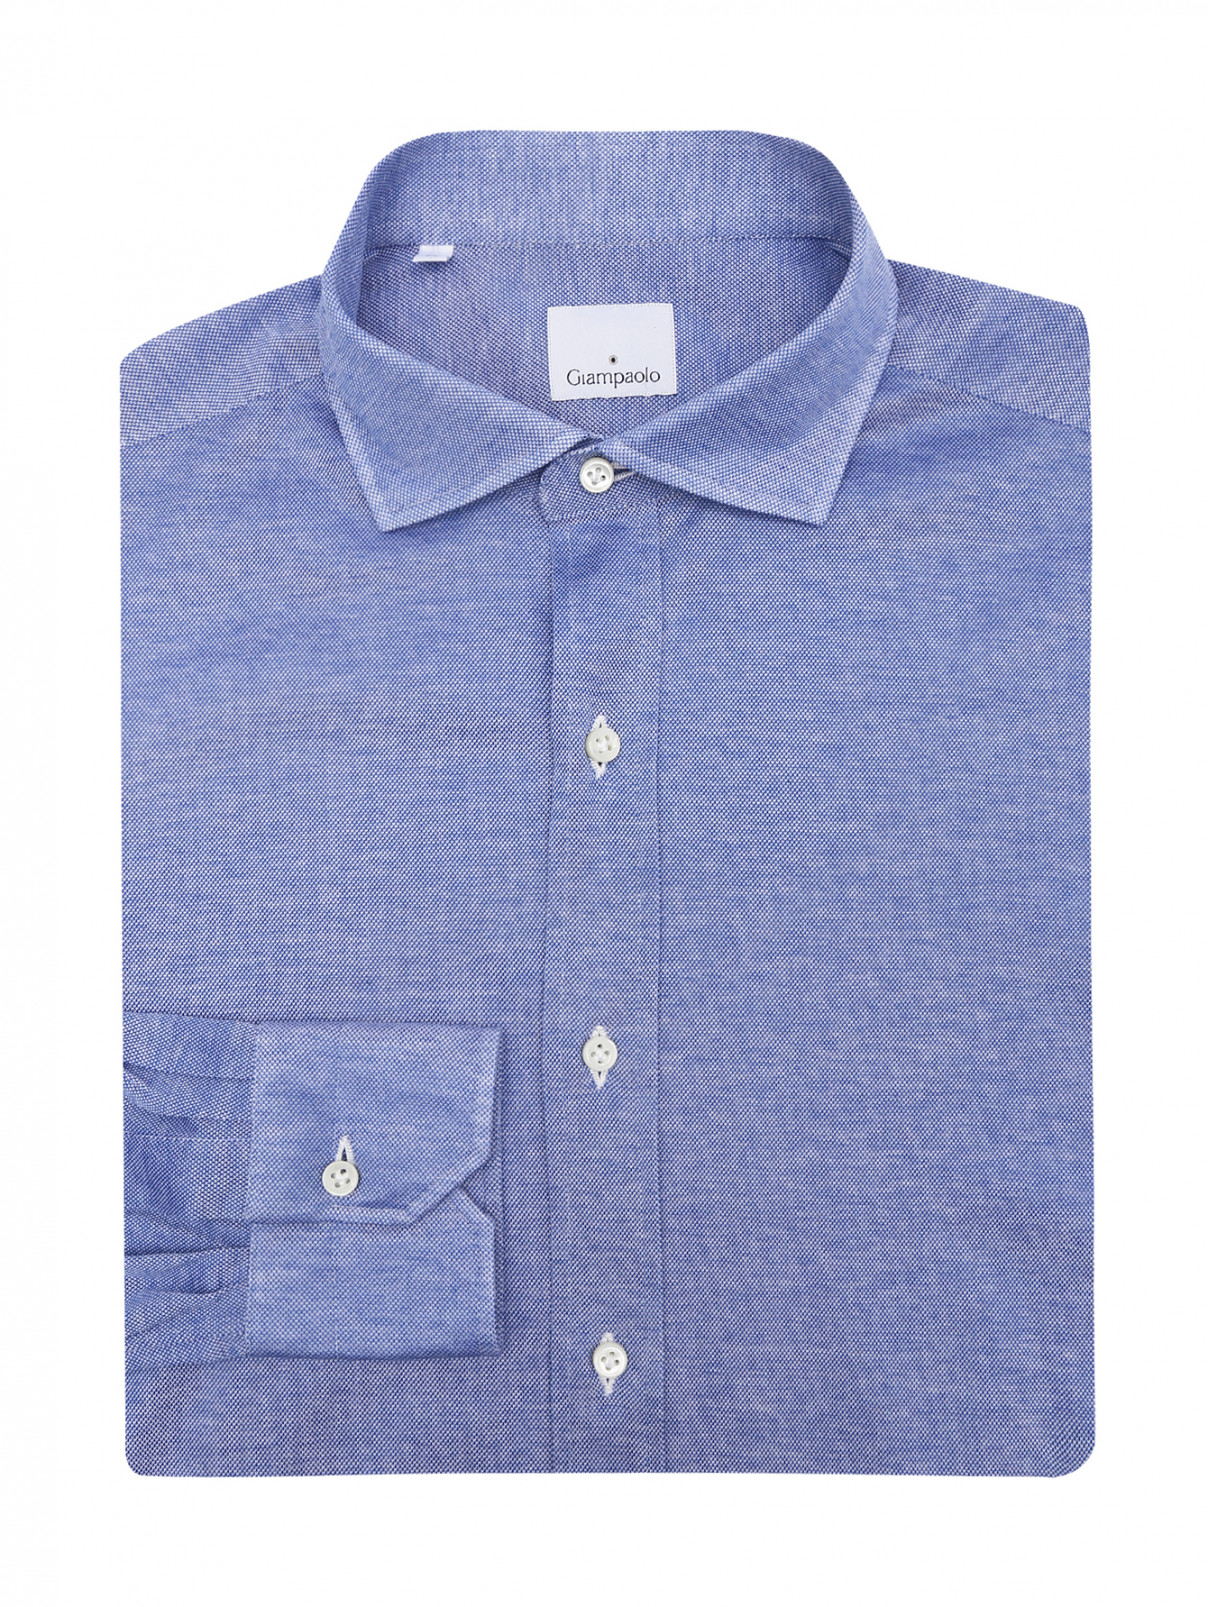 Рубашка из хлопка на пуговицах Giampaolo  –  Общий вид  – Цвет:  Синий